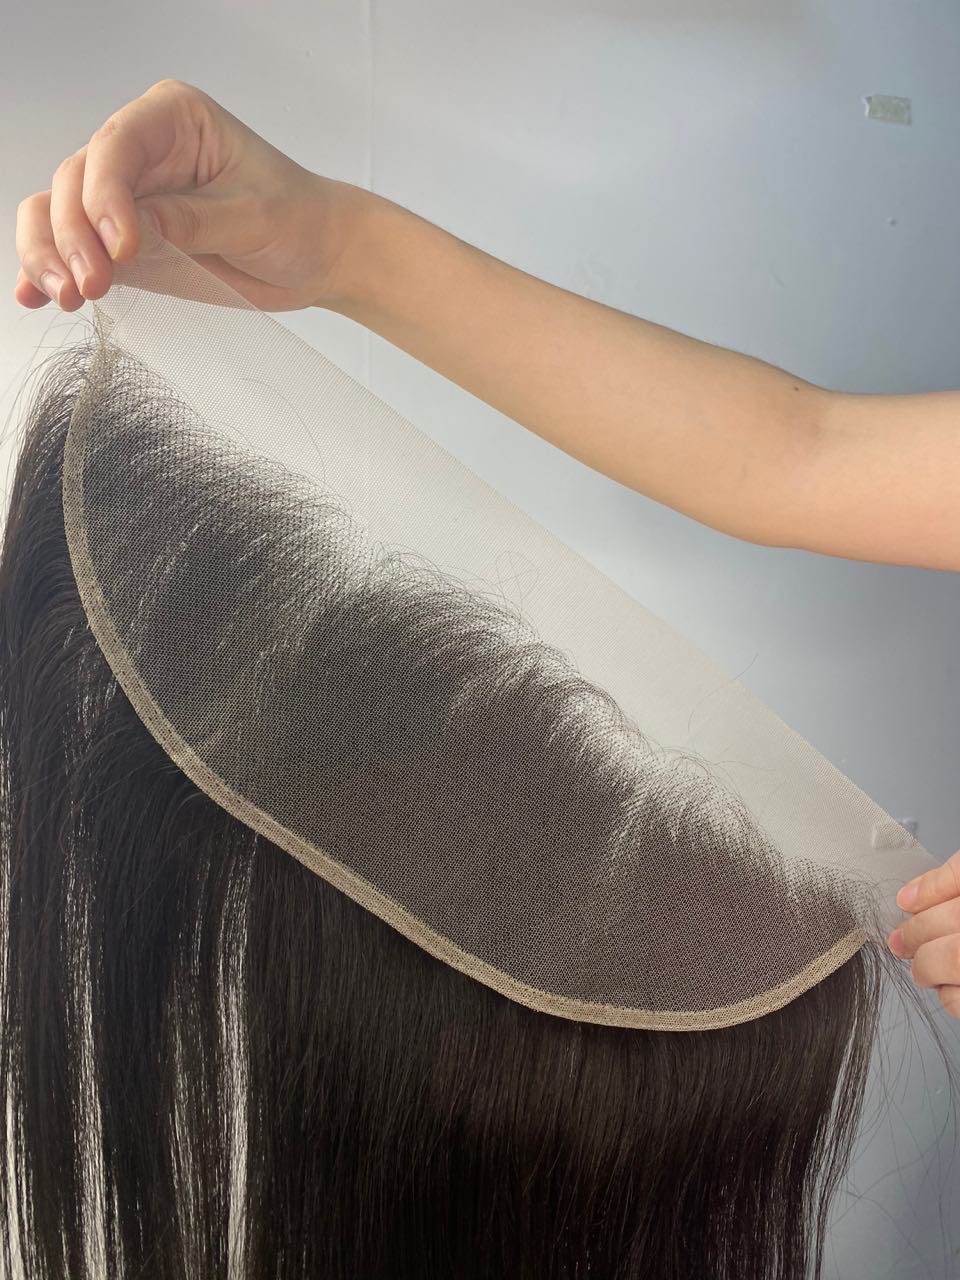 Brazilian Raw Hair Bundles with Frontal Straight Human Hair Wholesale